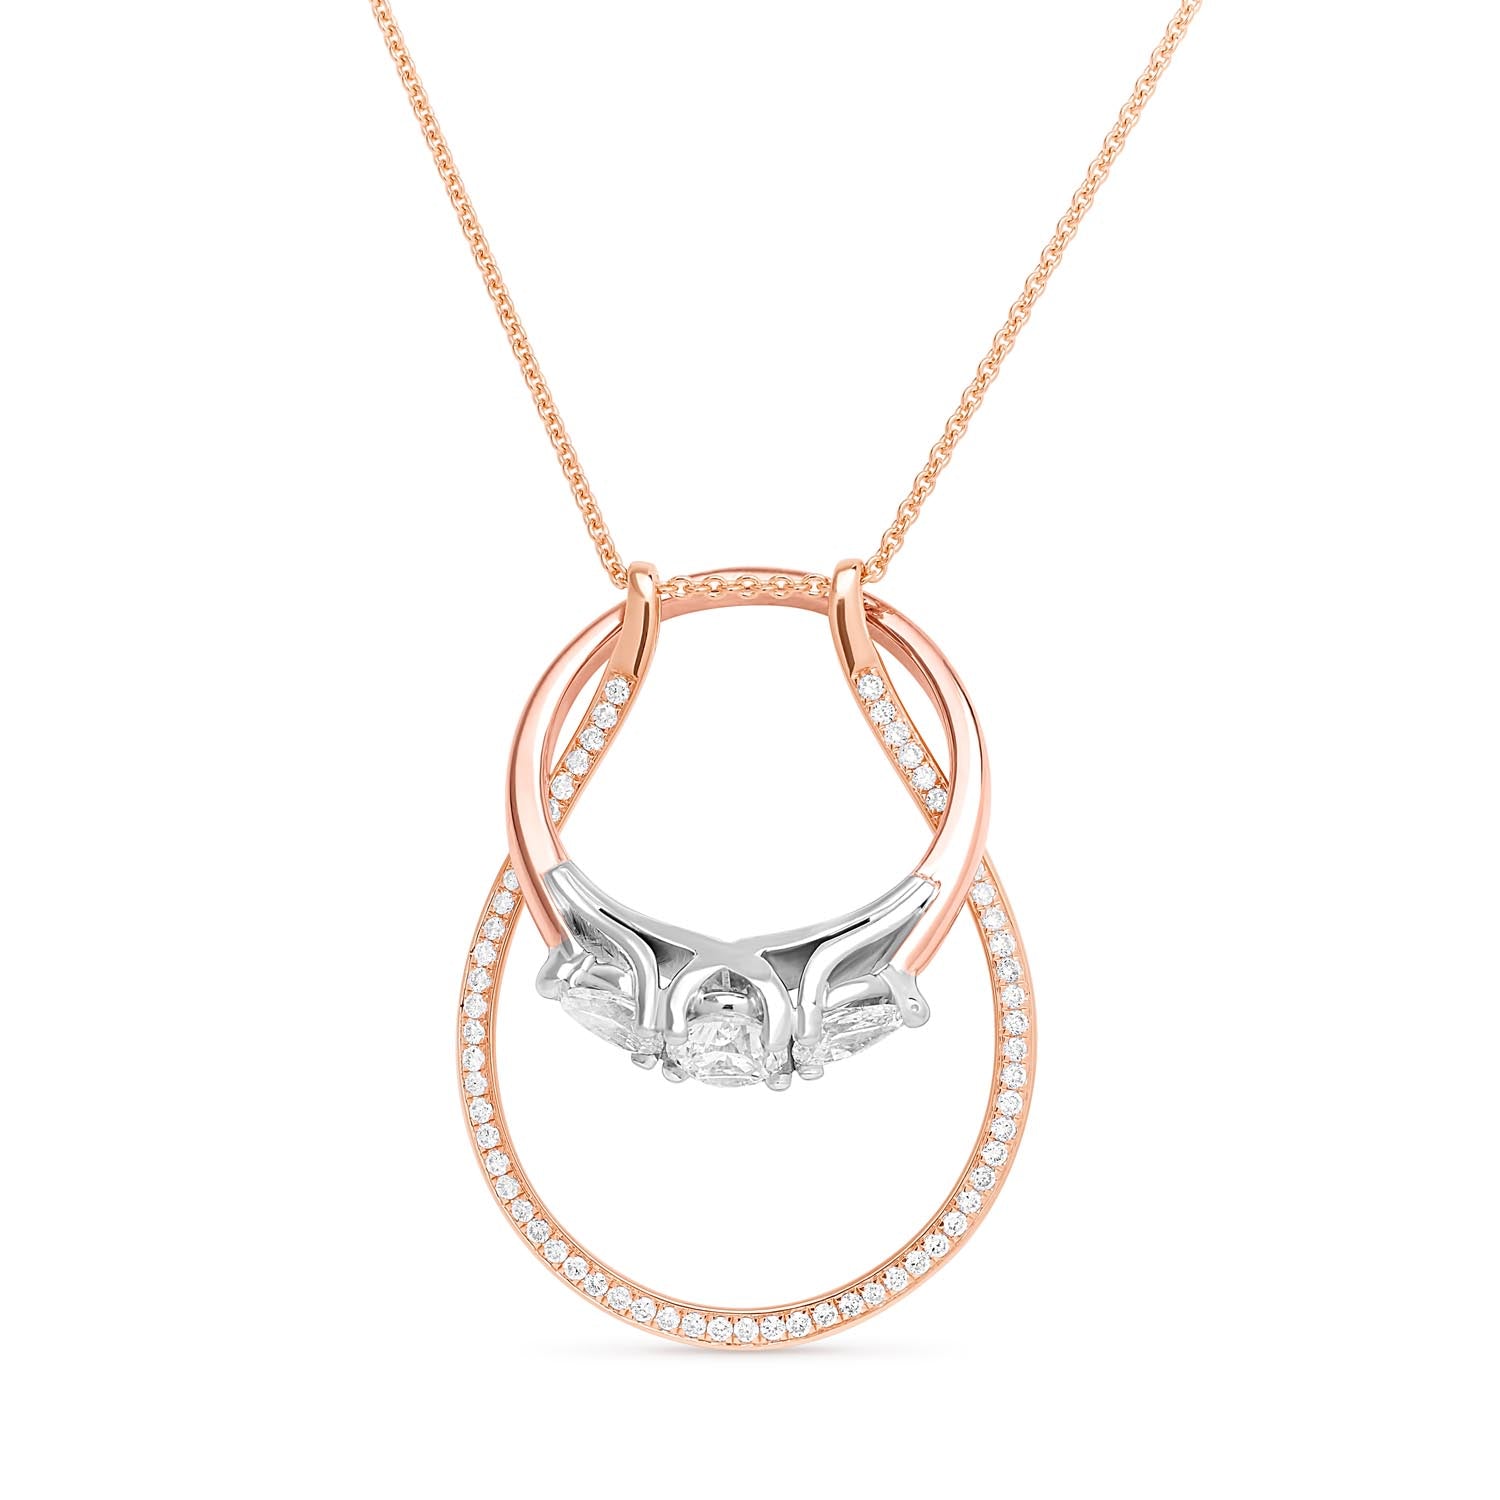 Ring Holder Diamond Necklace - Rose Gold